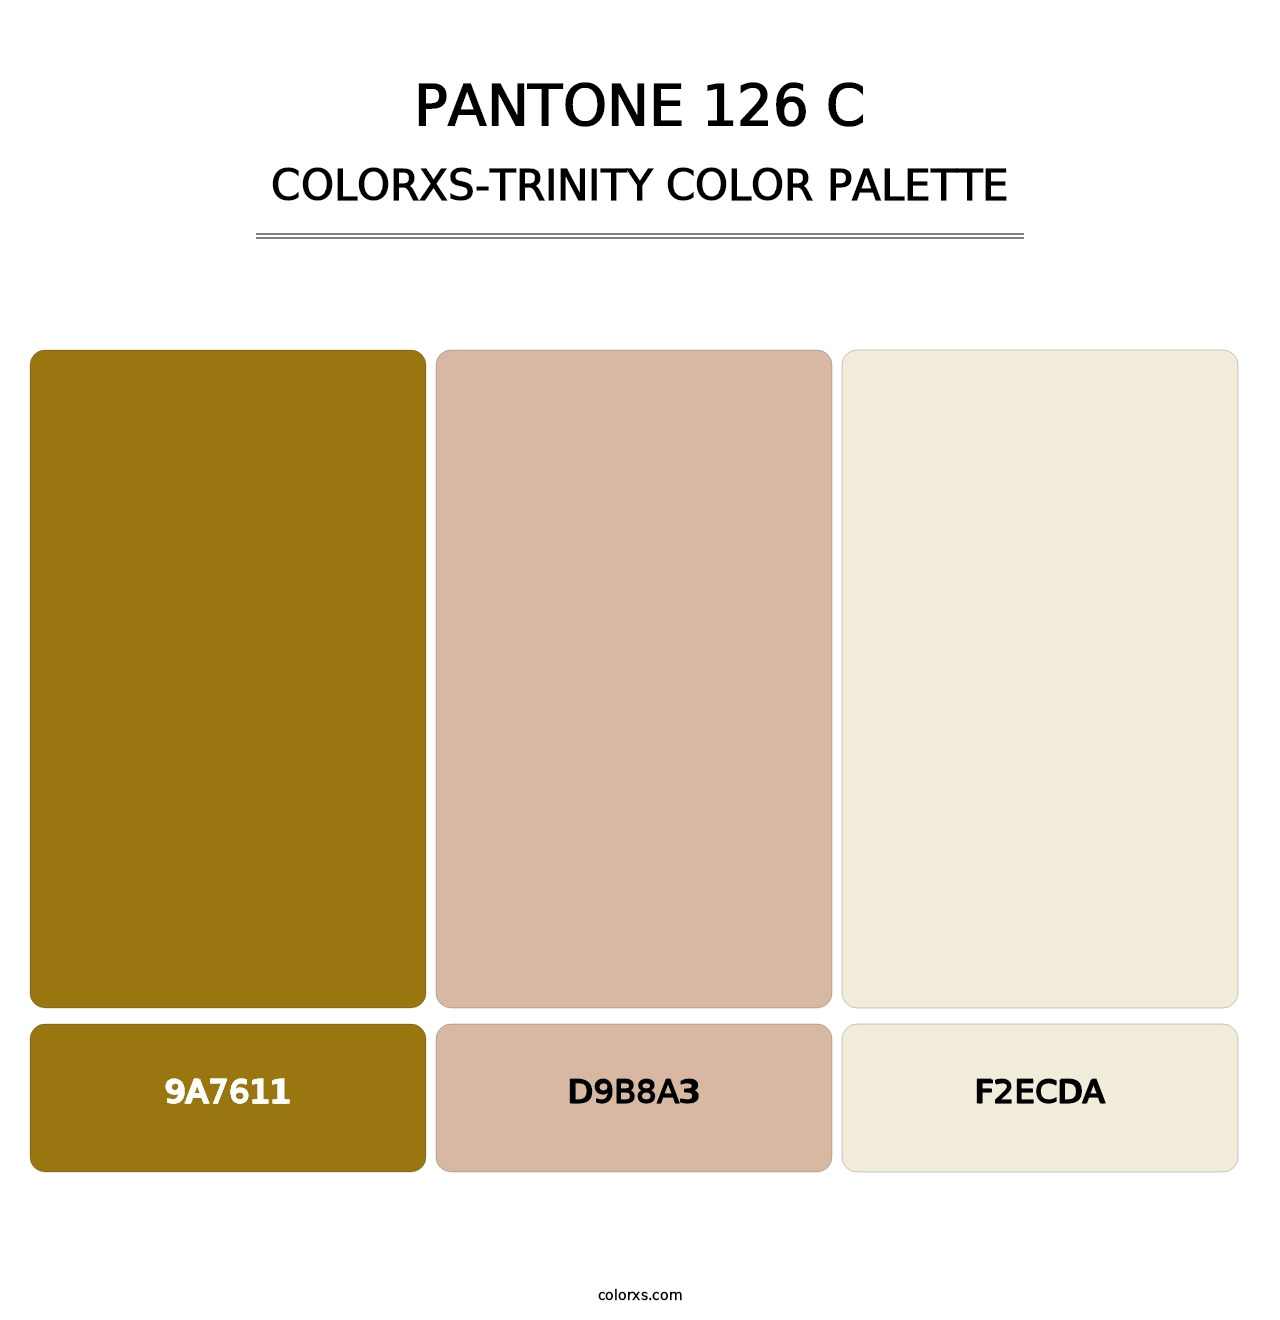 PANTONE 126 C - Colorxs Trinity Palette